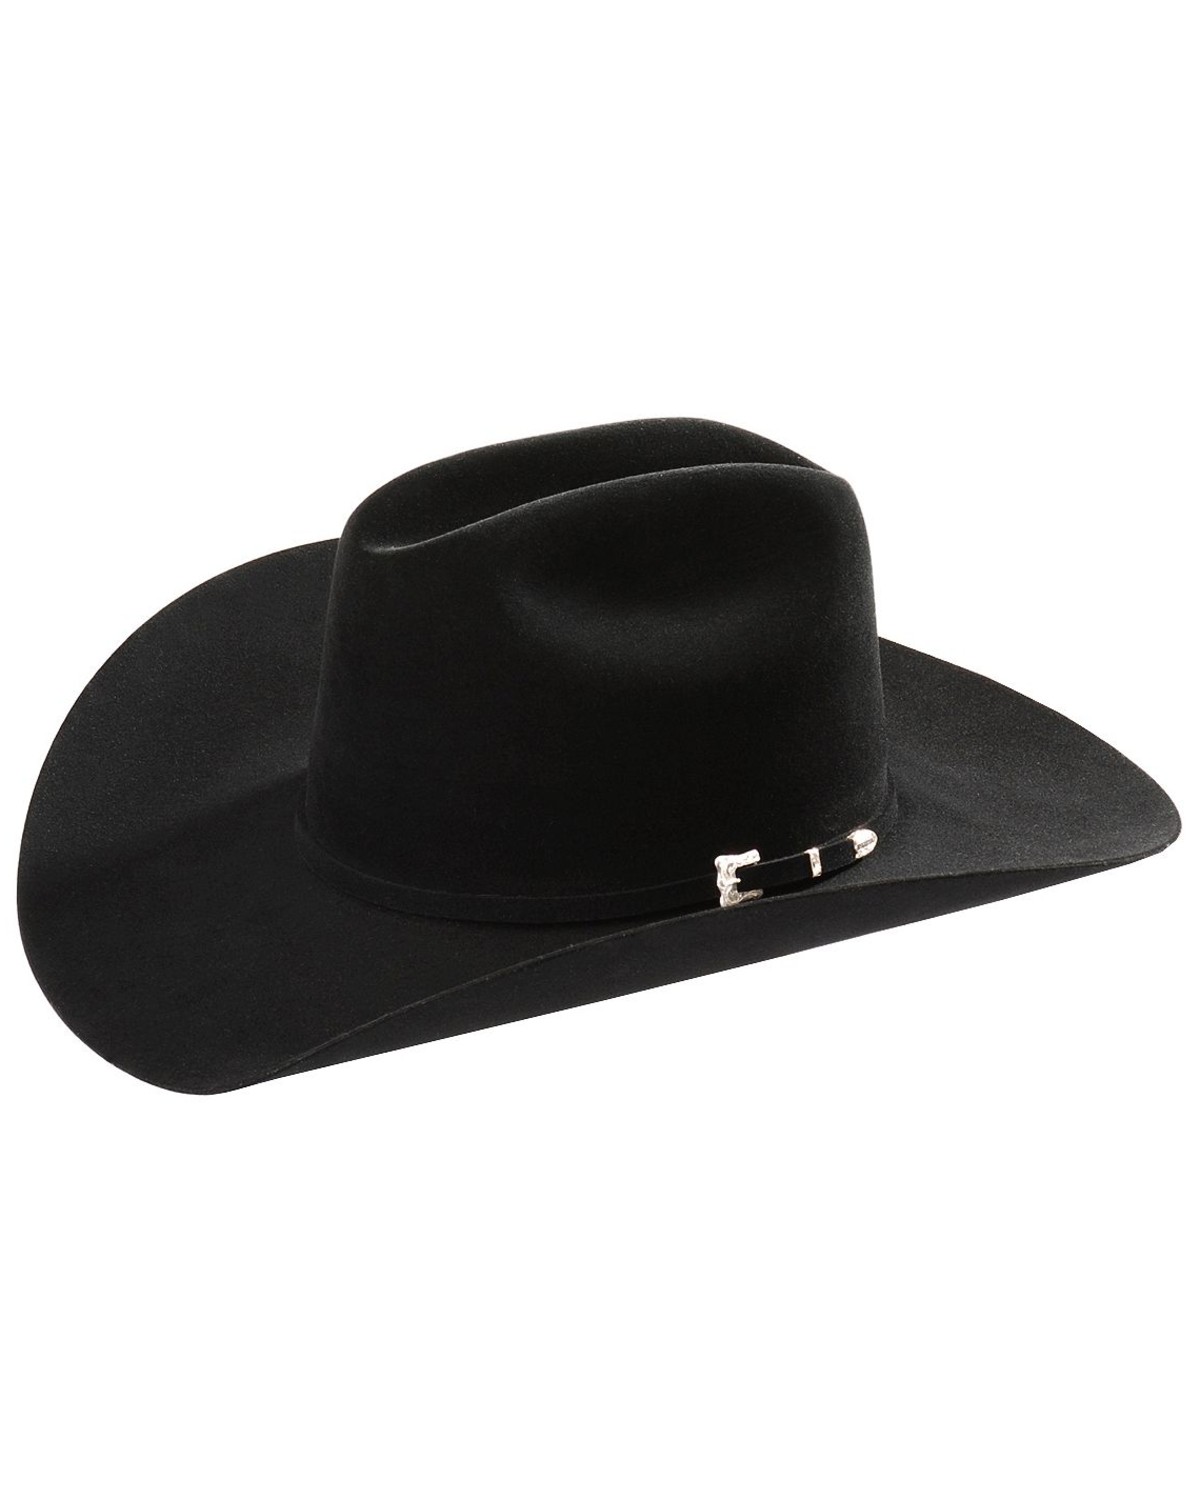 20x resistol cowboy hat